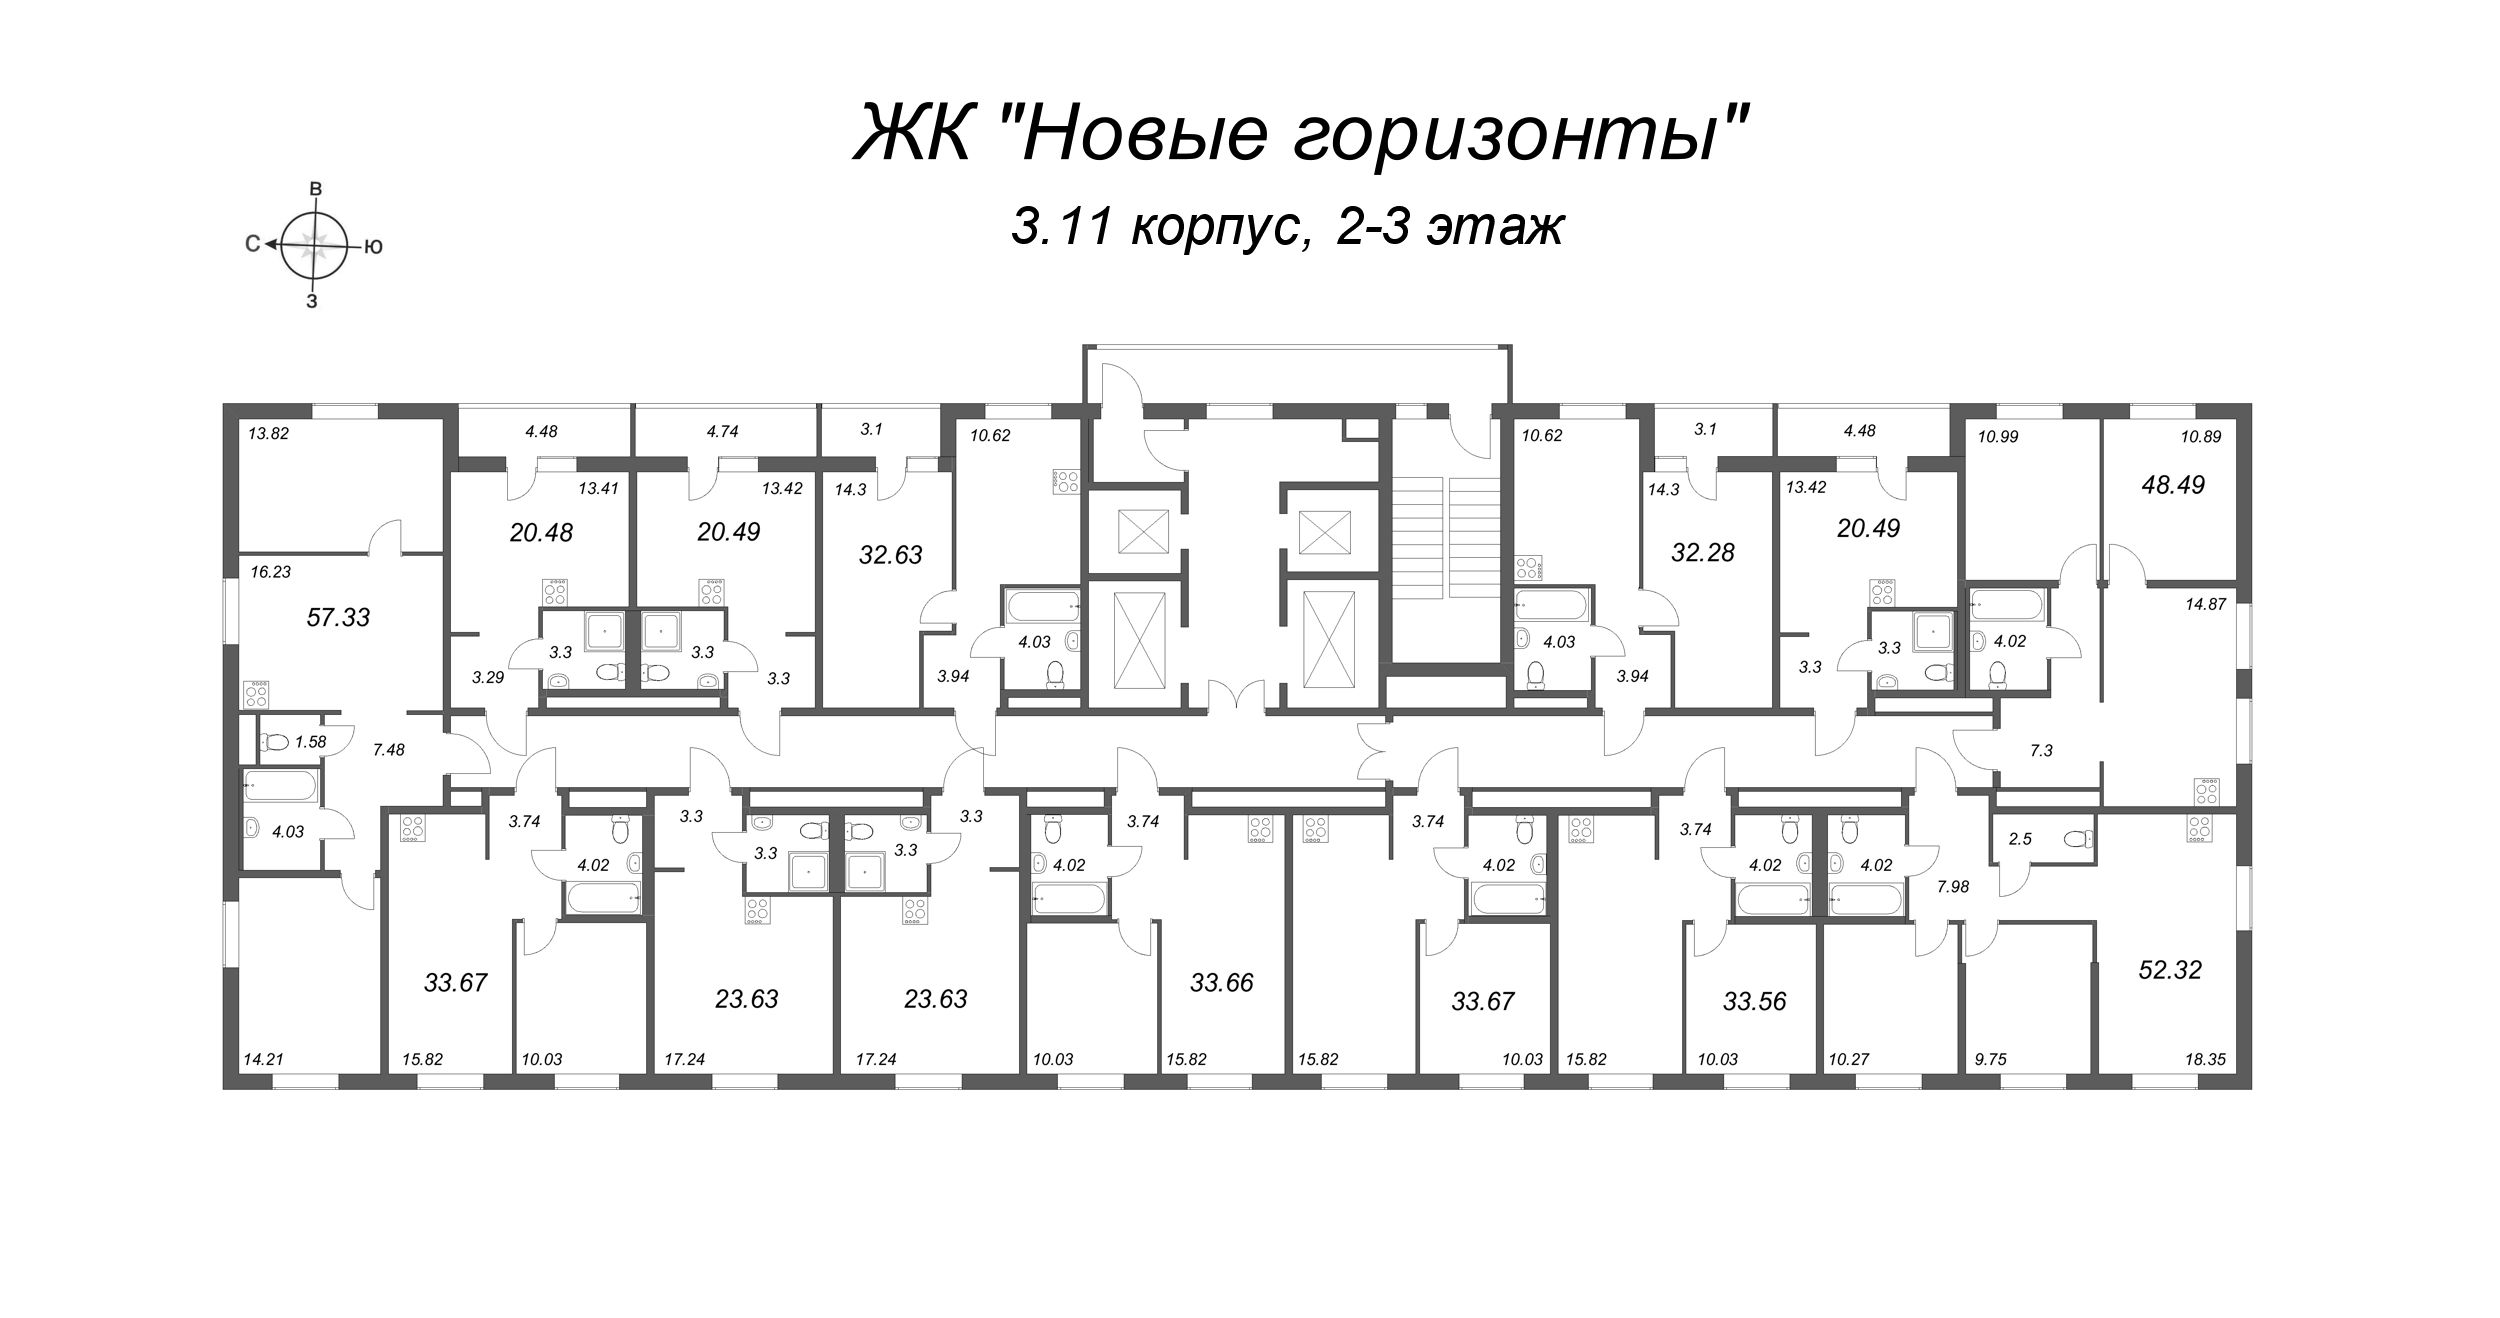 2-комнатная (Евро) квартира, 33.56 м² - планировка этажа